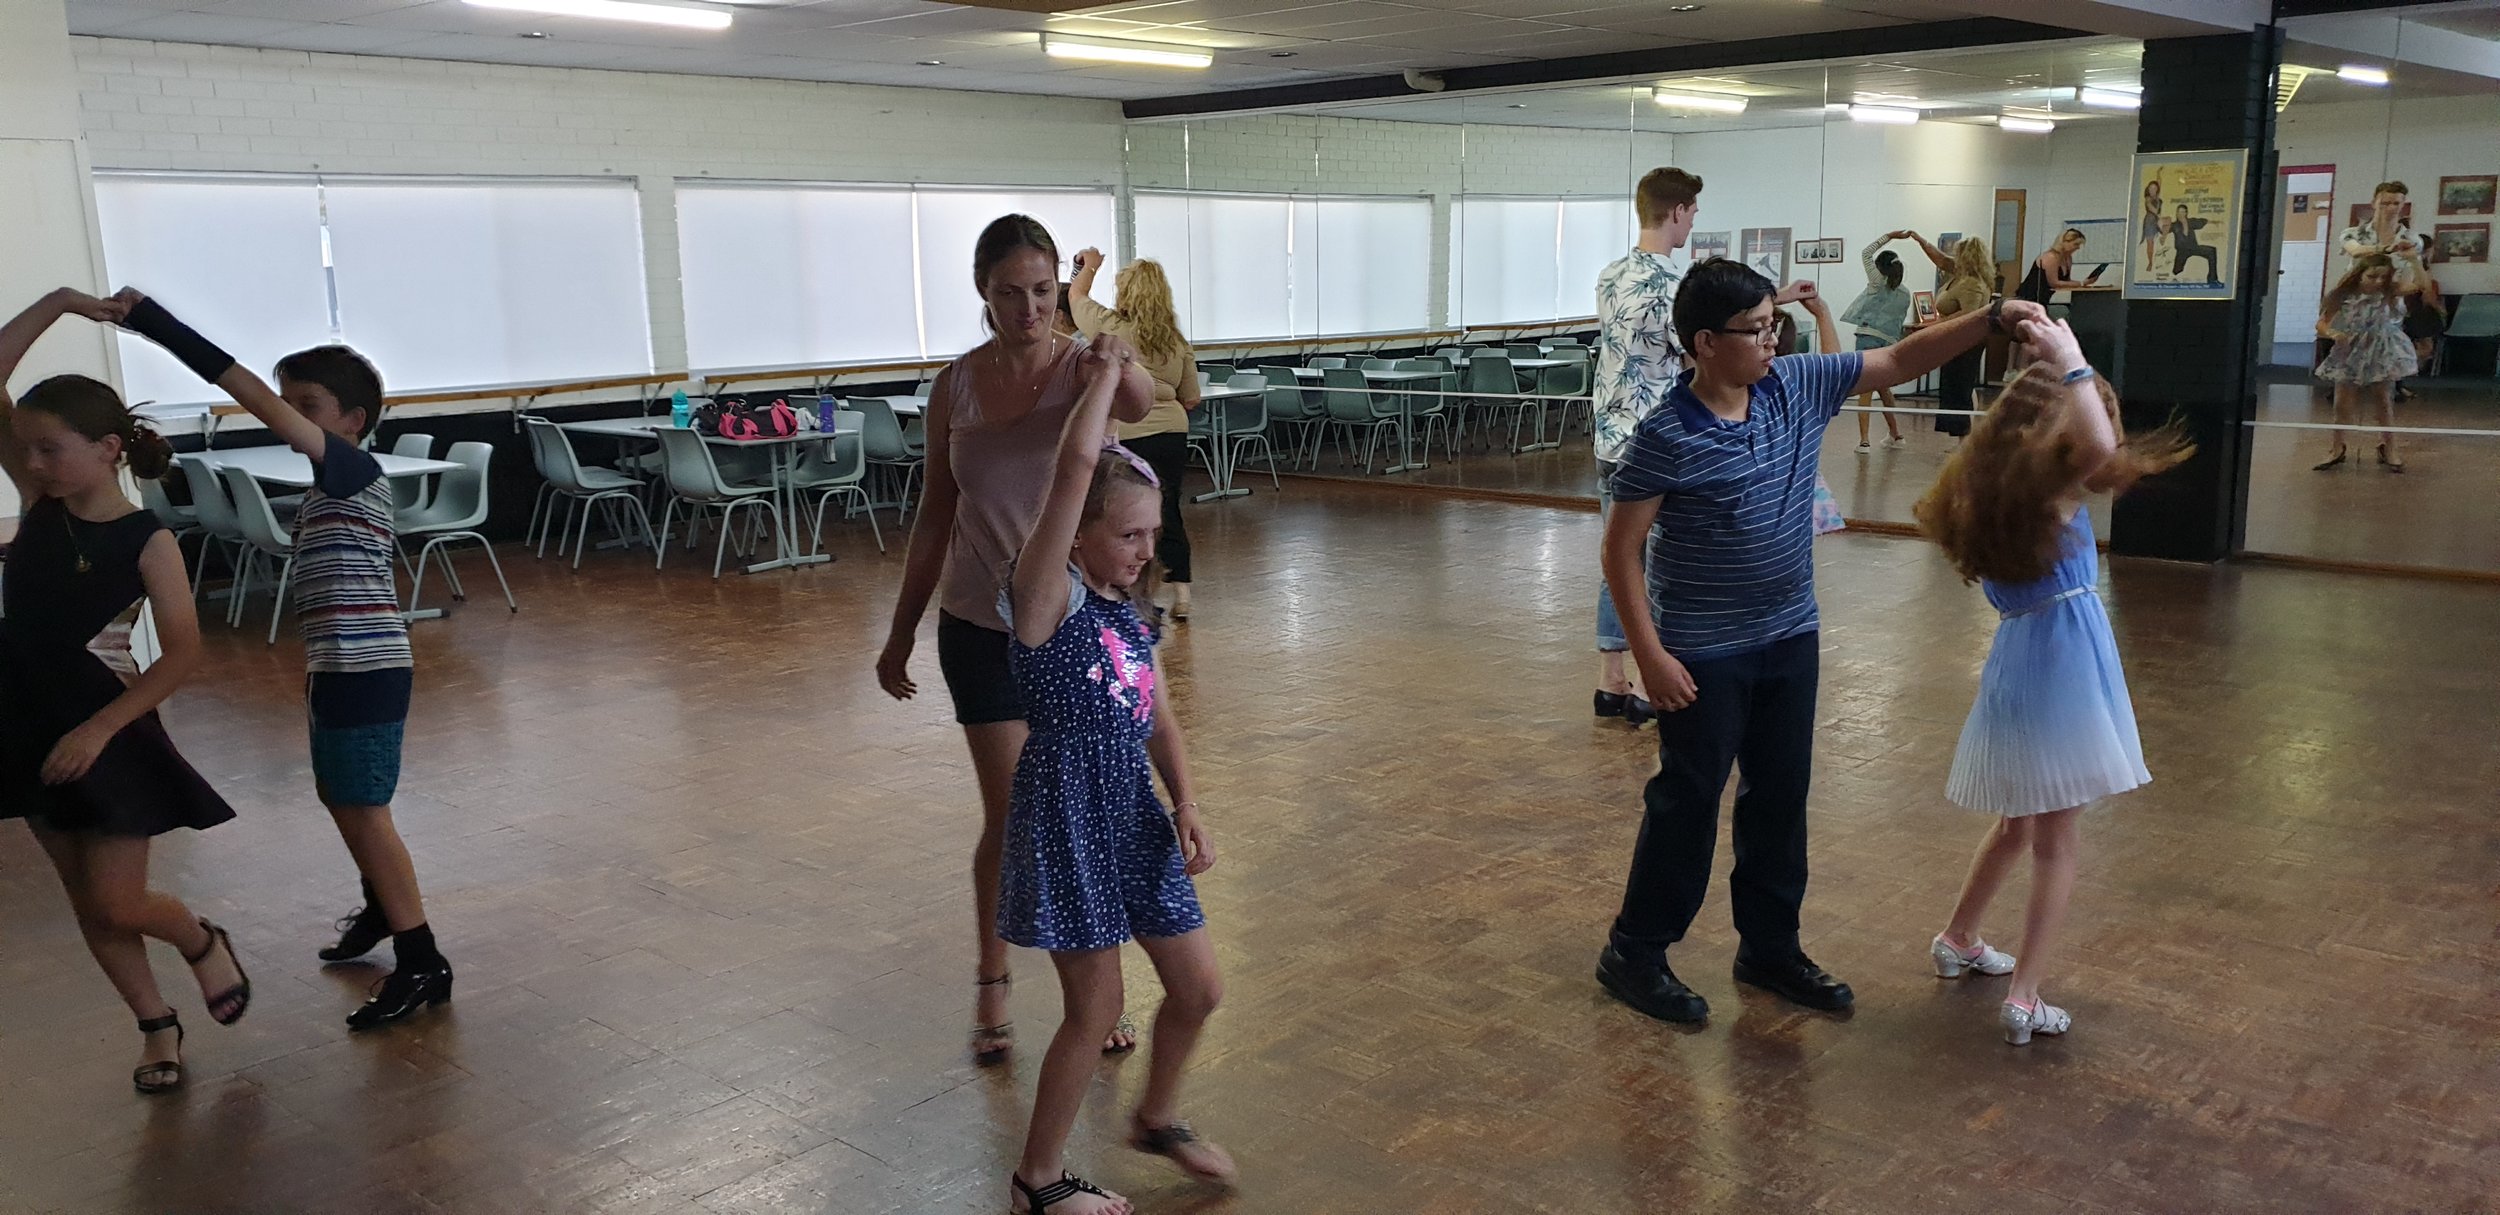 chisholm dance_children dance classes_wangarra.jpg